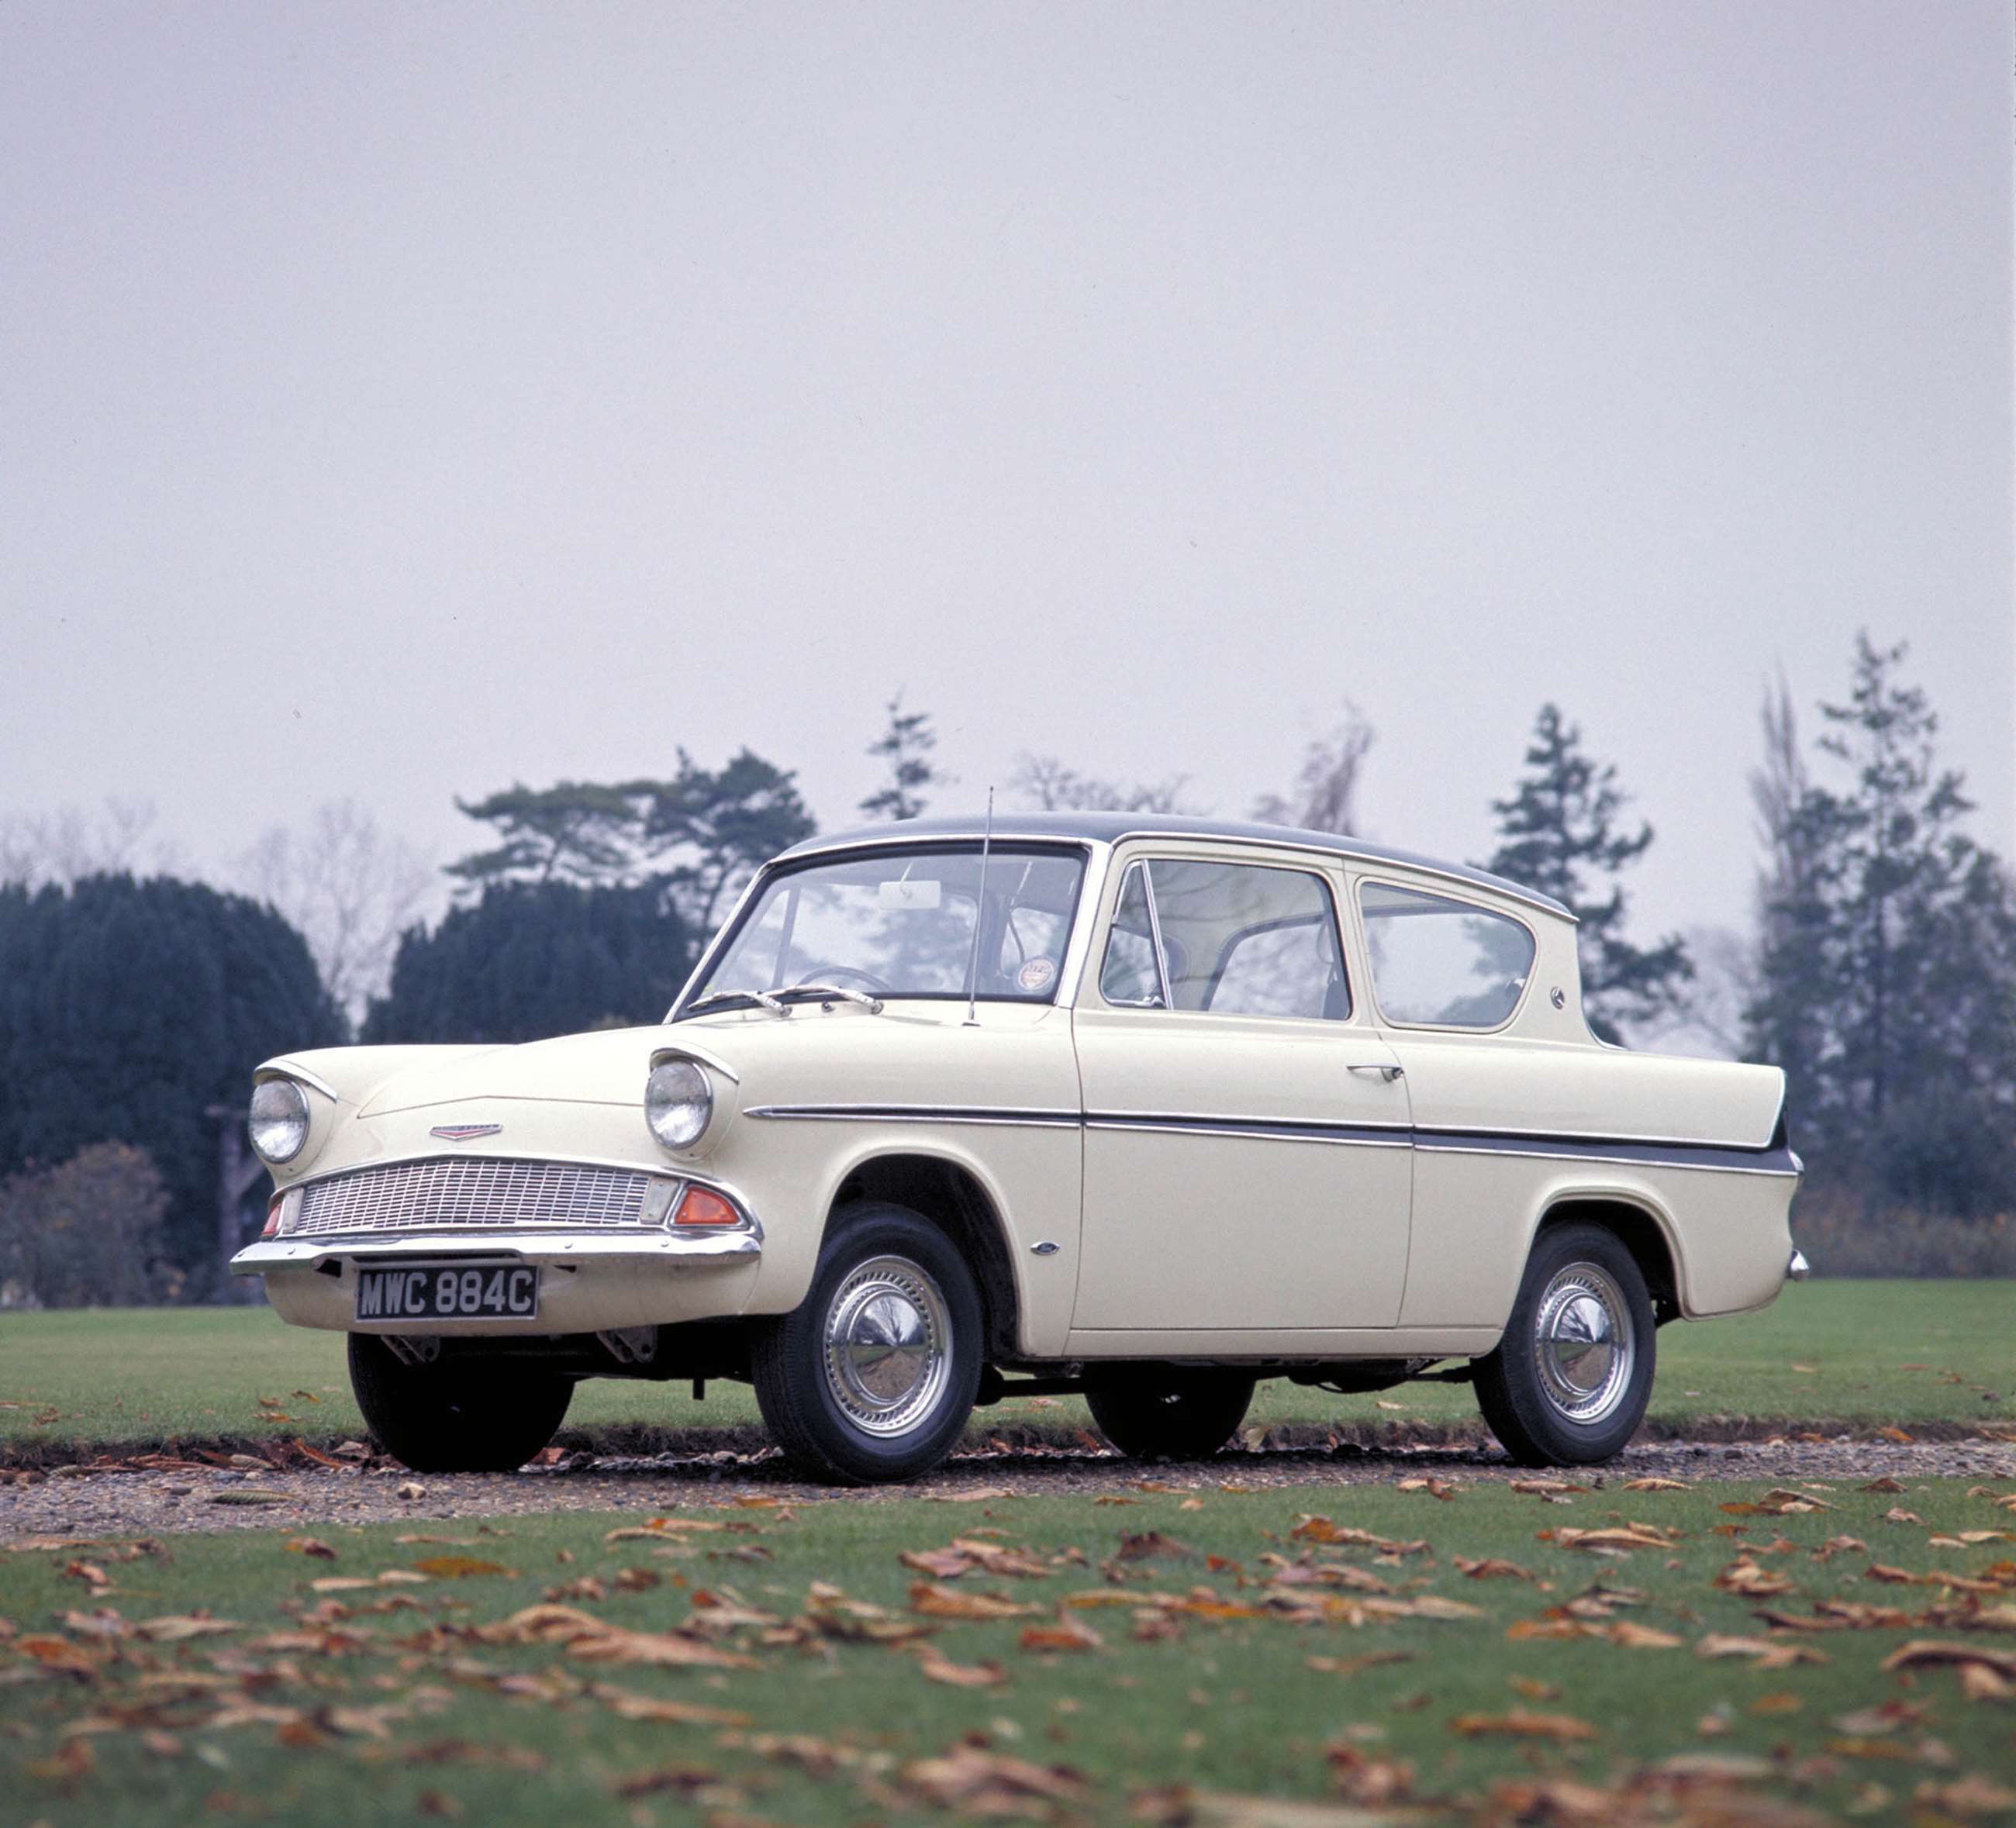 1959-ford-anglia-mwc-884c-goodwood-25102019.jpg